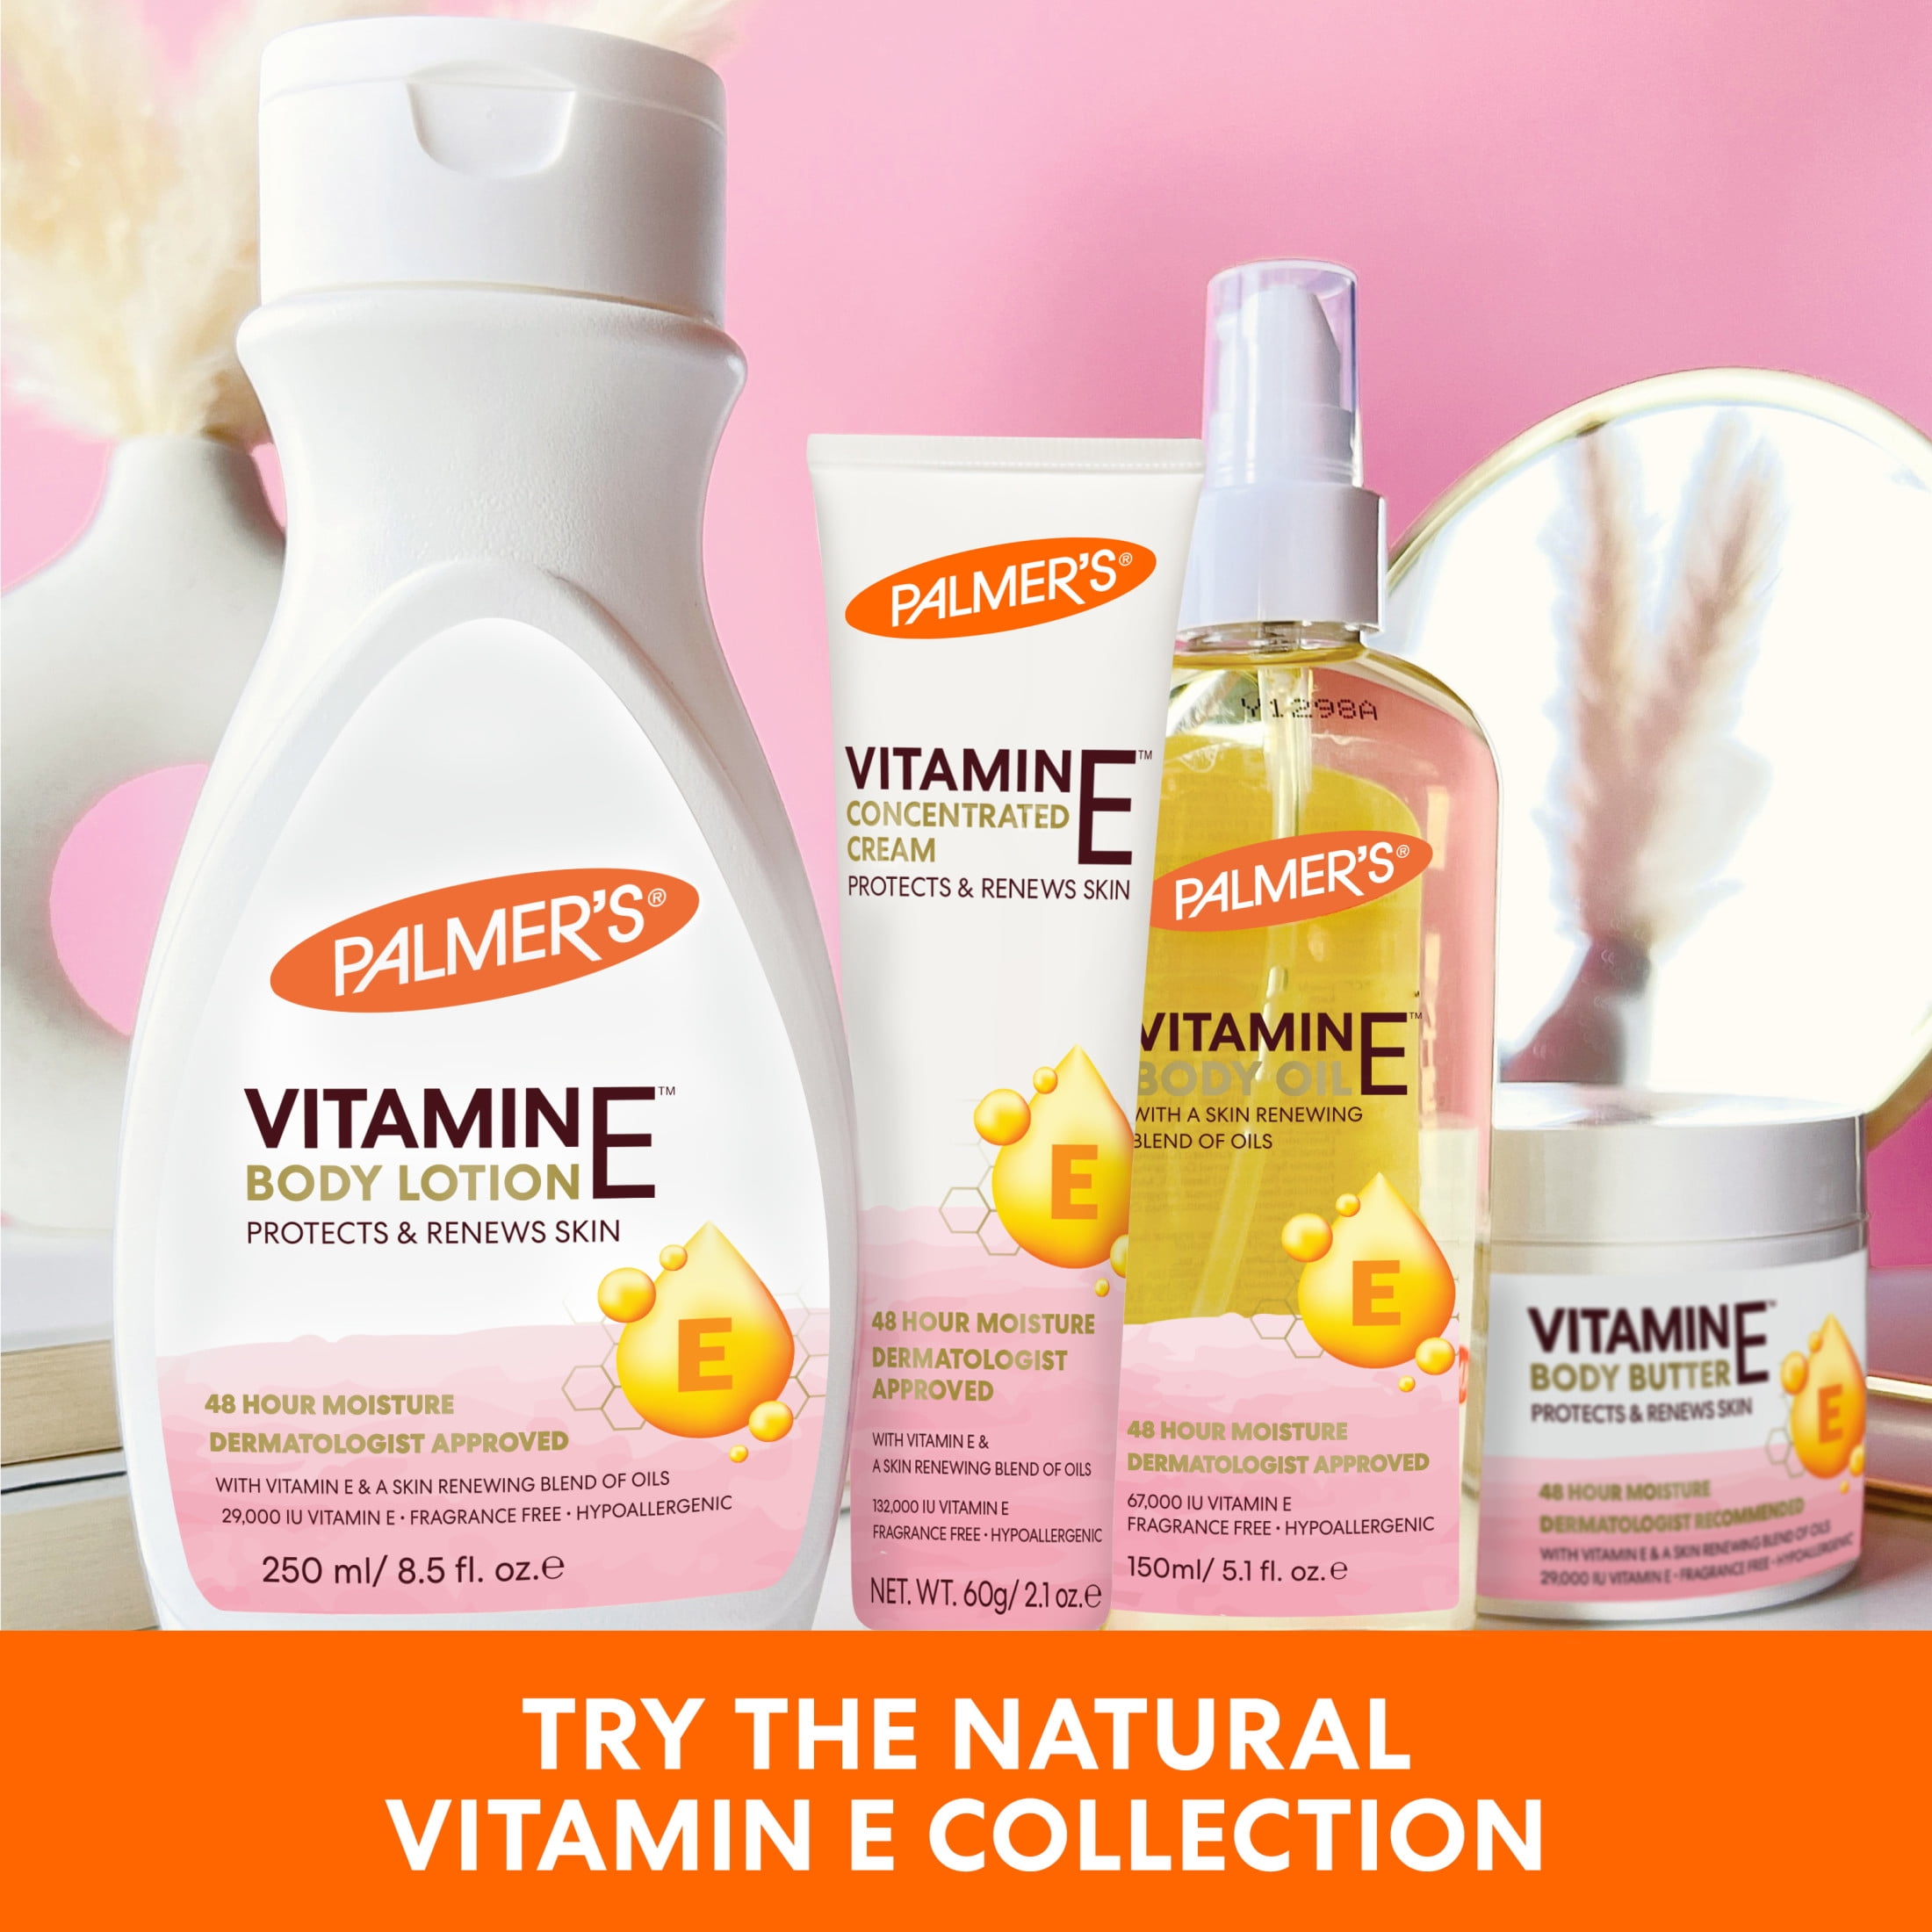 Palmer's Vitamin E Body Oil, 5.1 fl. oz.